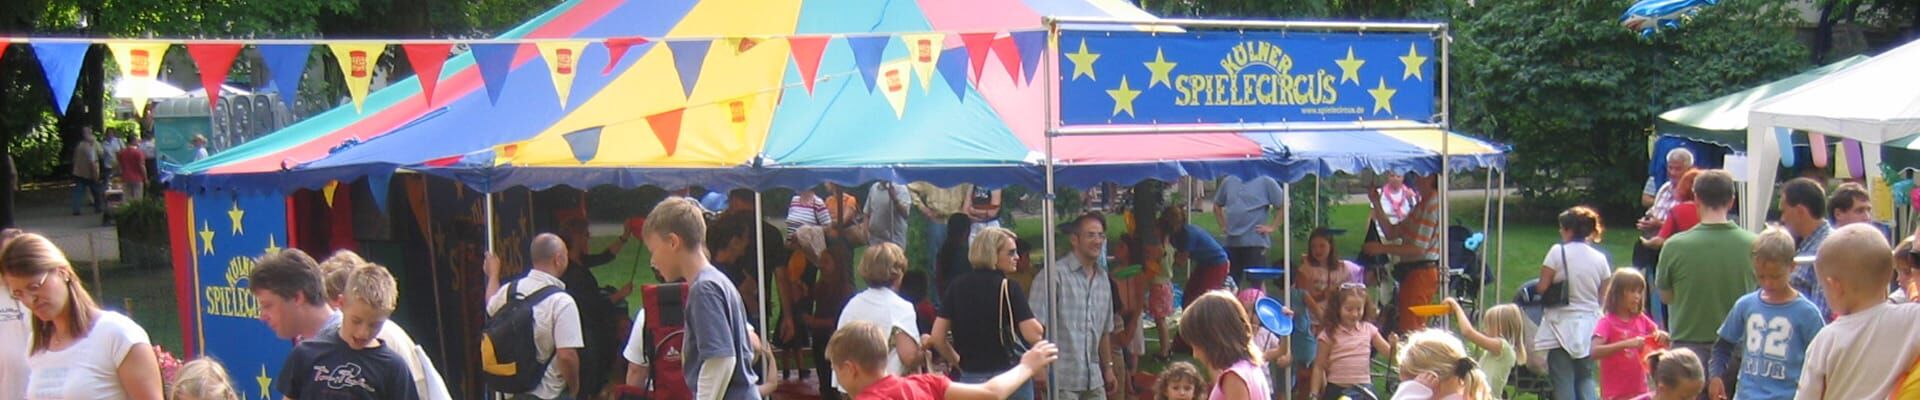 Zirkus-Feste im Kindergarten - Kölner Spielecircus e.V.